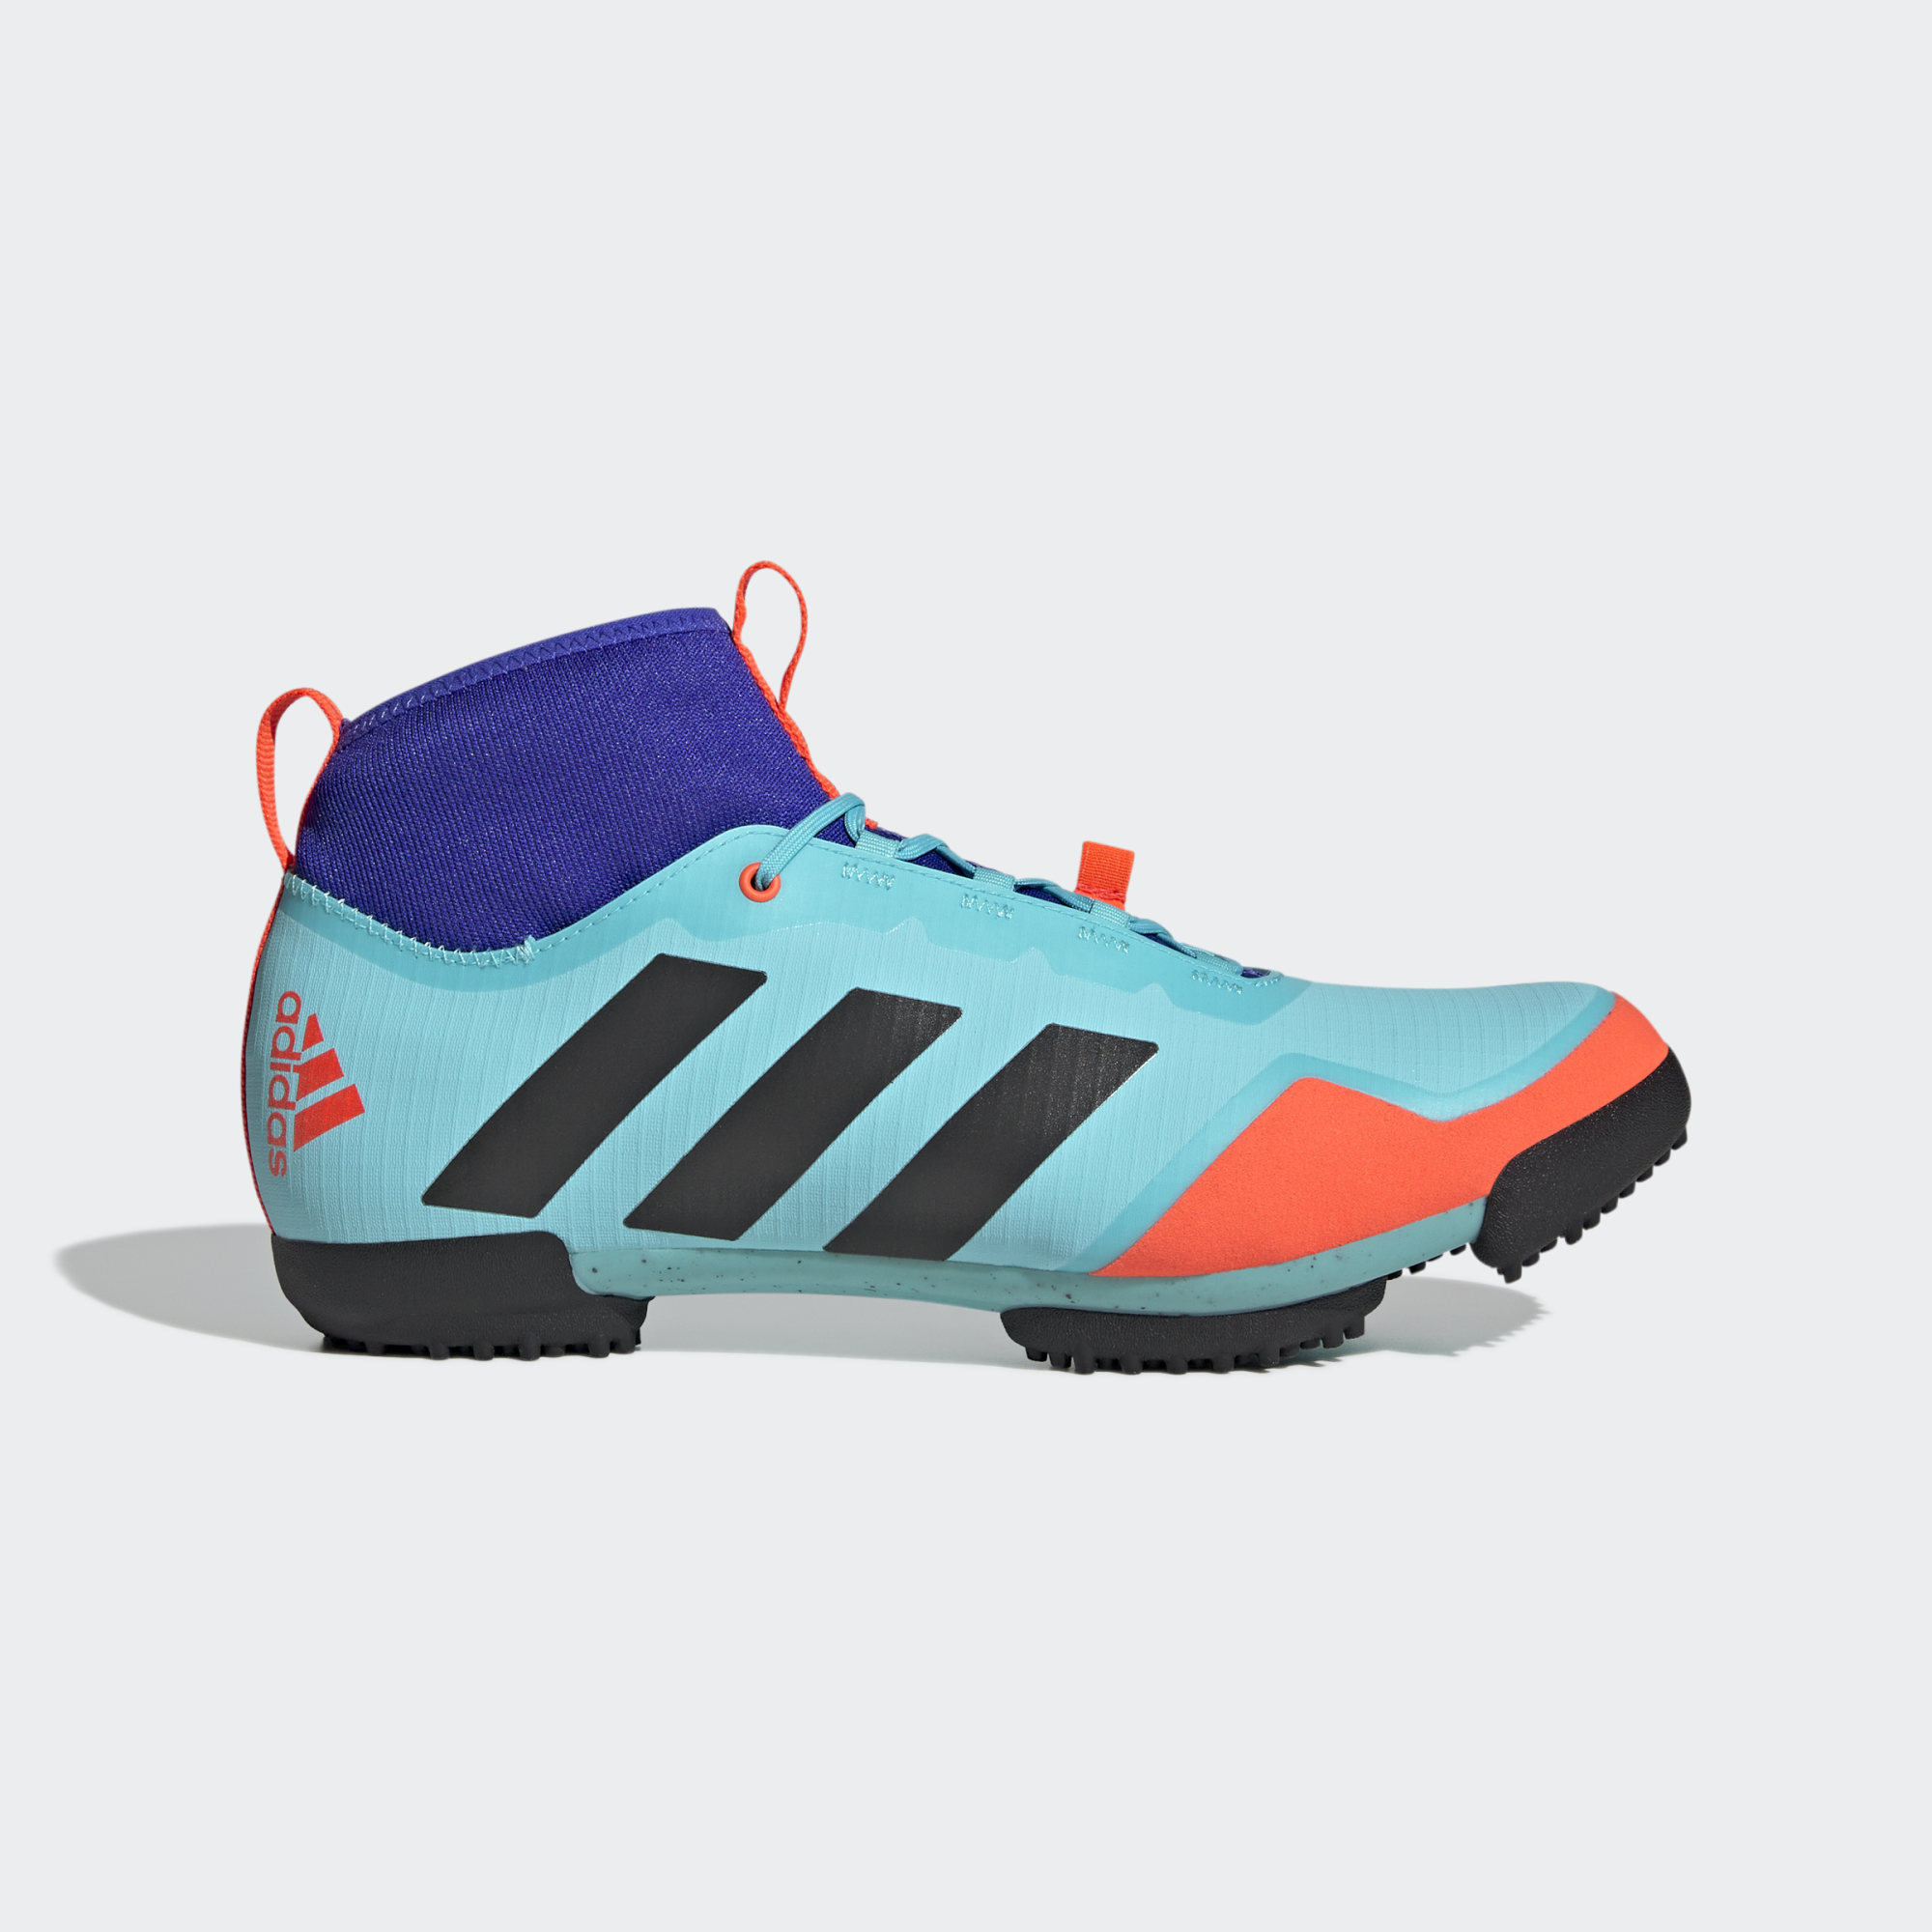 Test: Adidas Terrex Trail Cross SL MTB-Schuhe in der Praxis